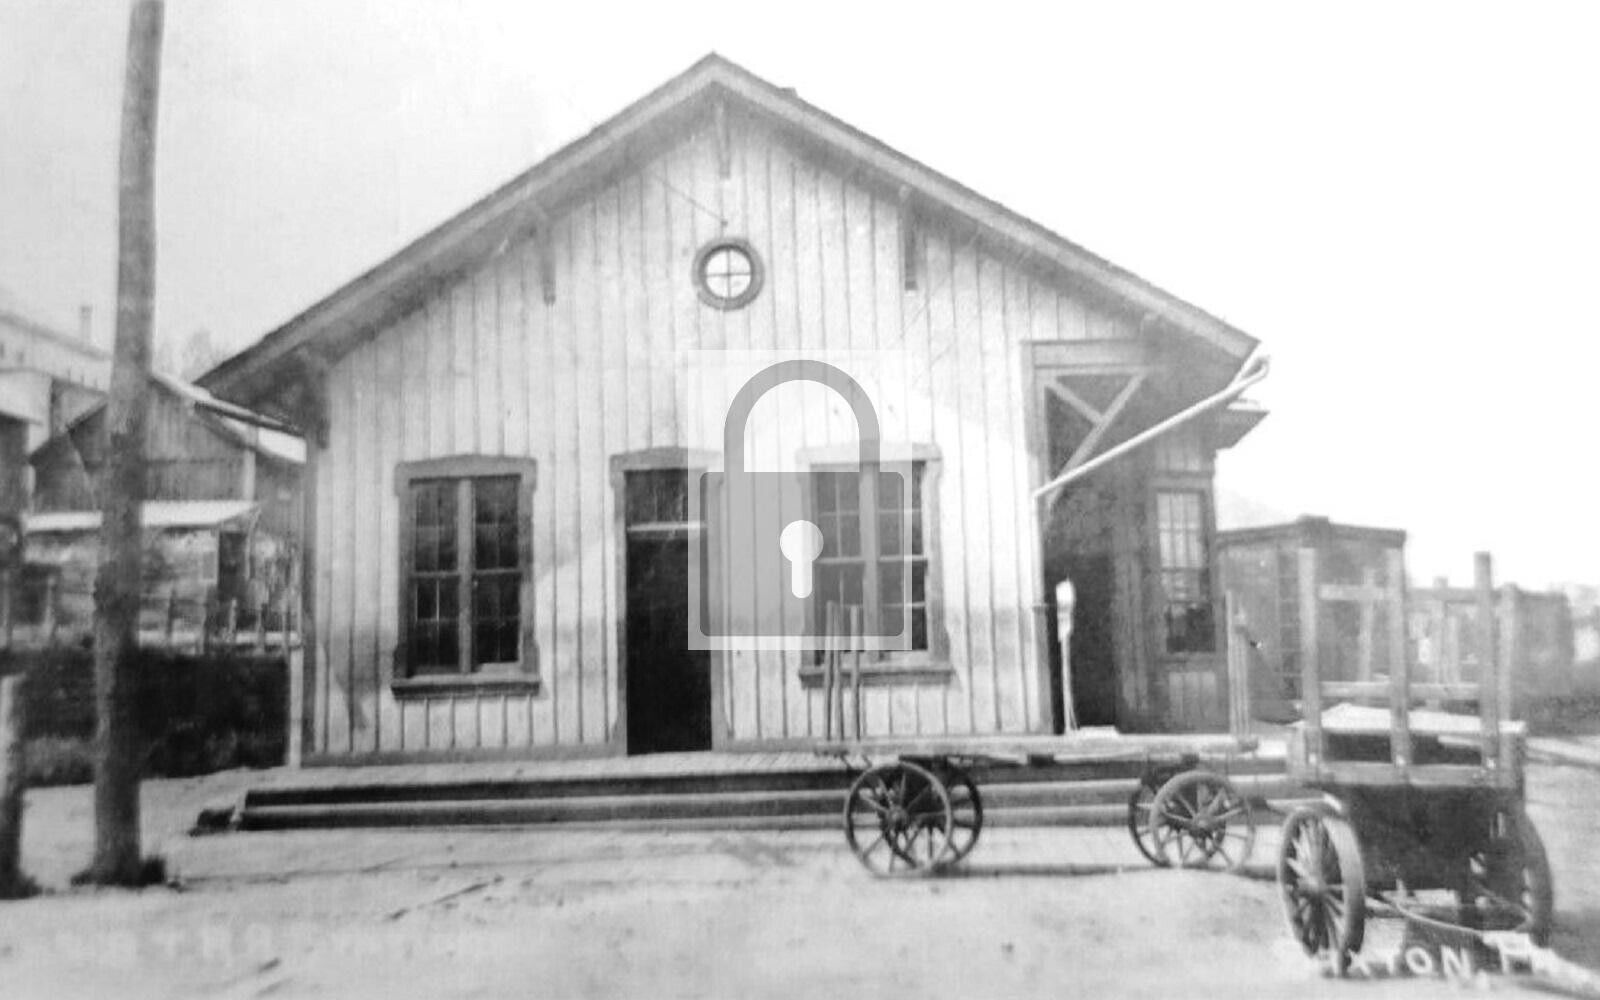 Railroad Train Station Depot Saxton Pennsylvania PA - 8x10 Reprint